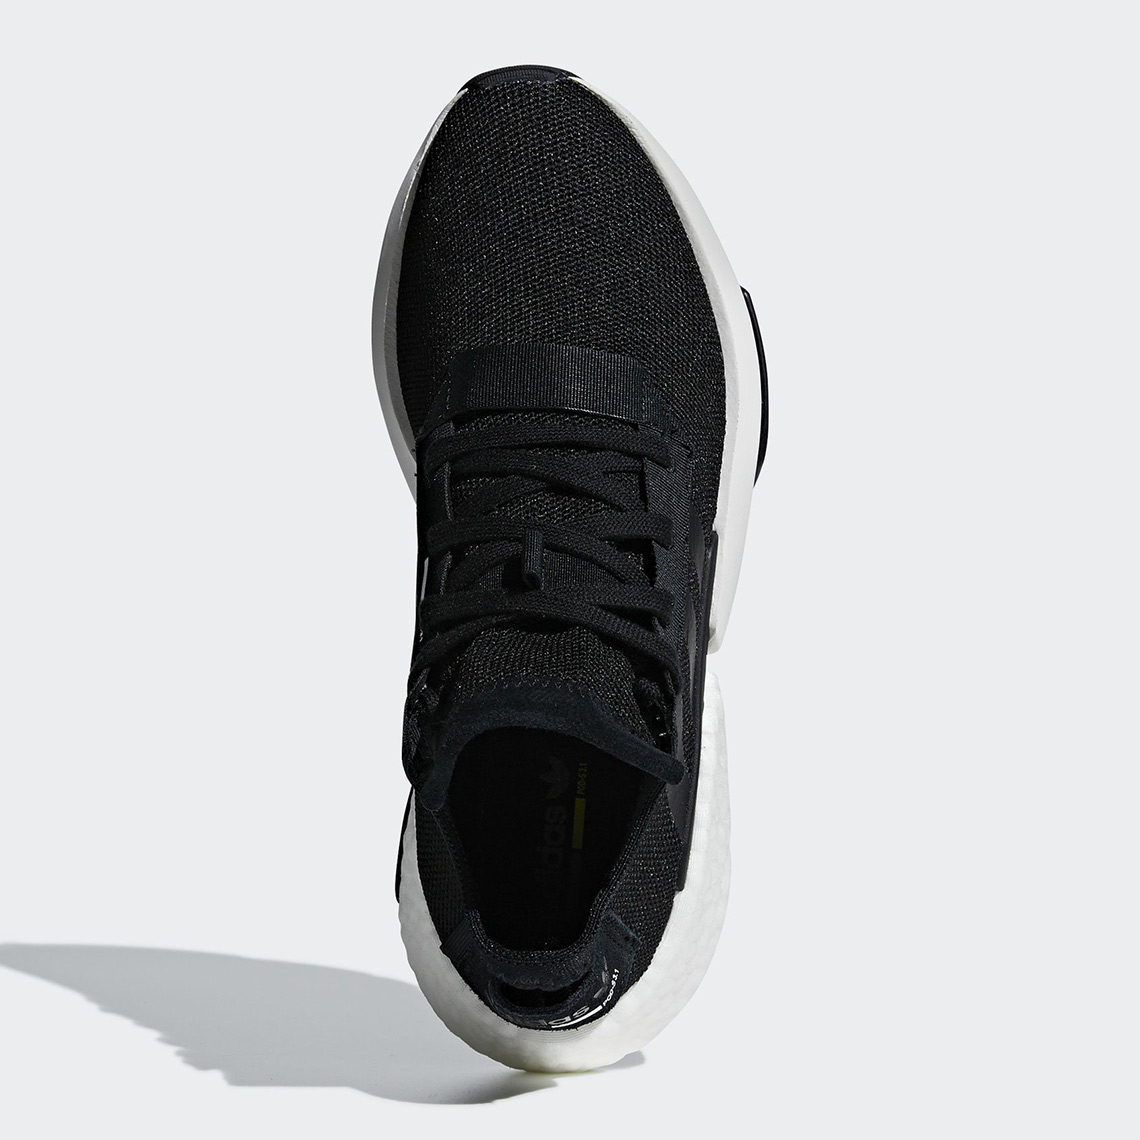 Adidas Pod Black White B37366 4